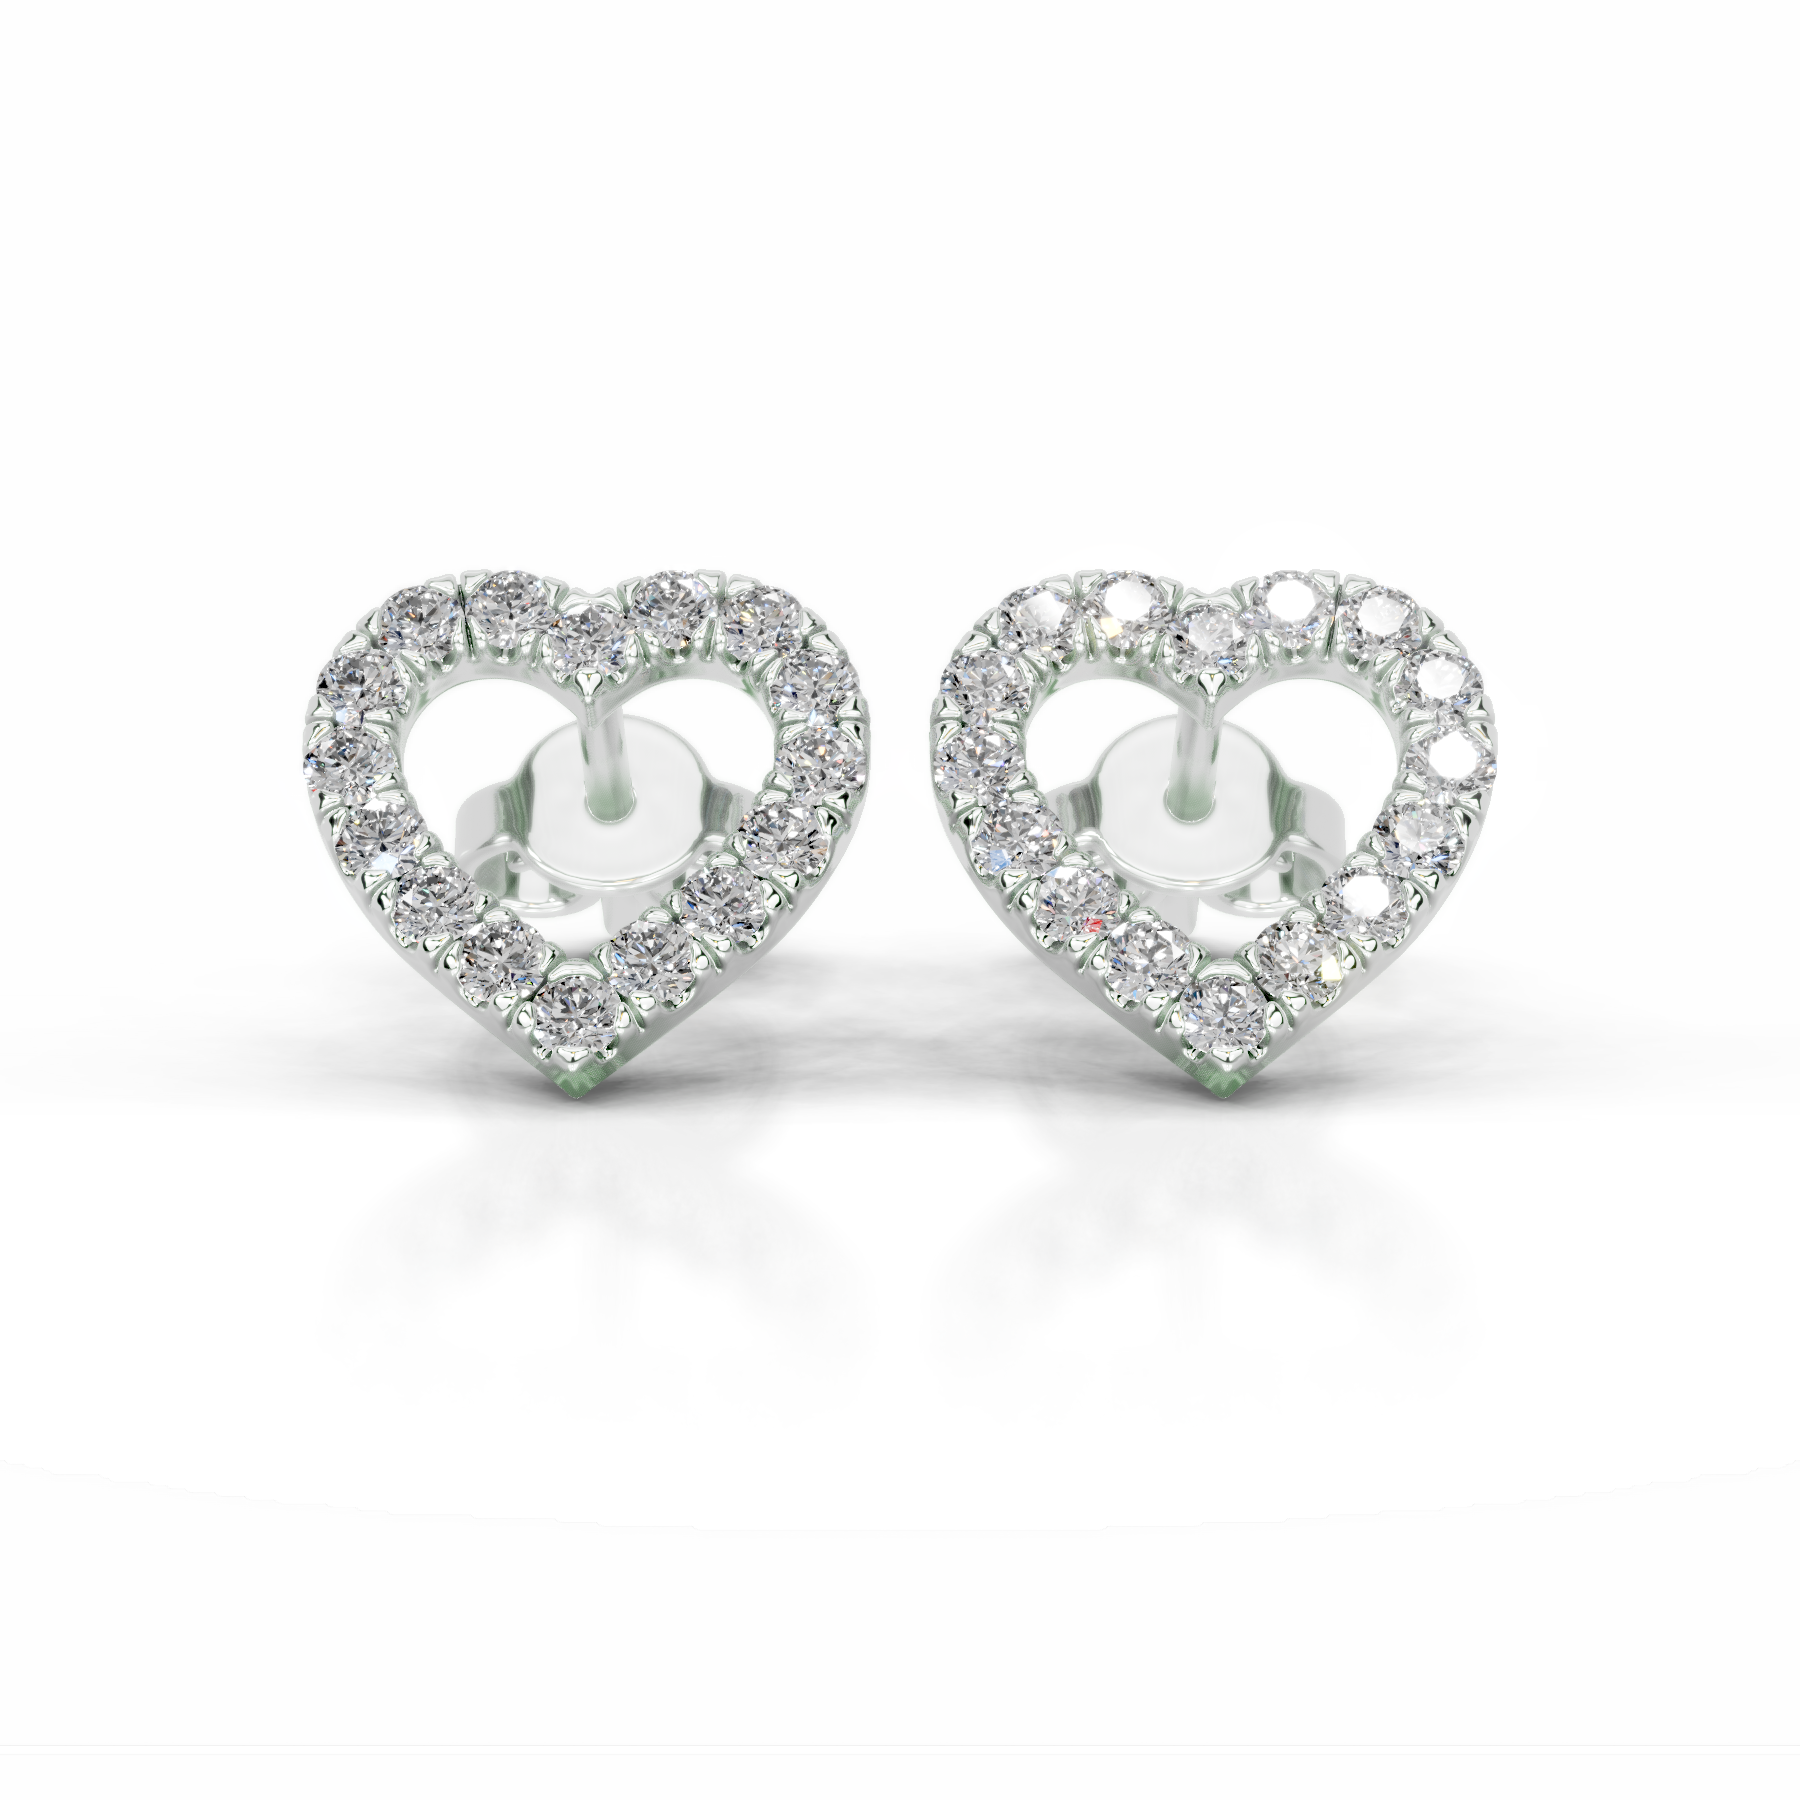 Linda Lab Grown Diamond Studs Earrings   (0.40 Carat) -14K White Gold